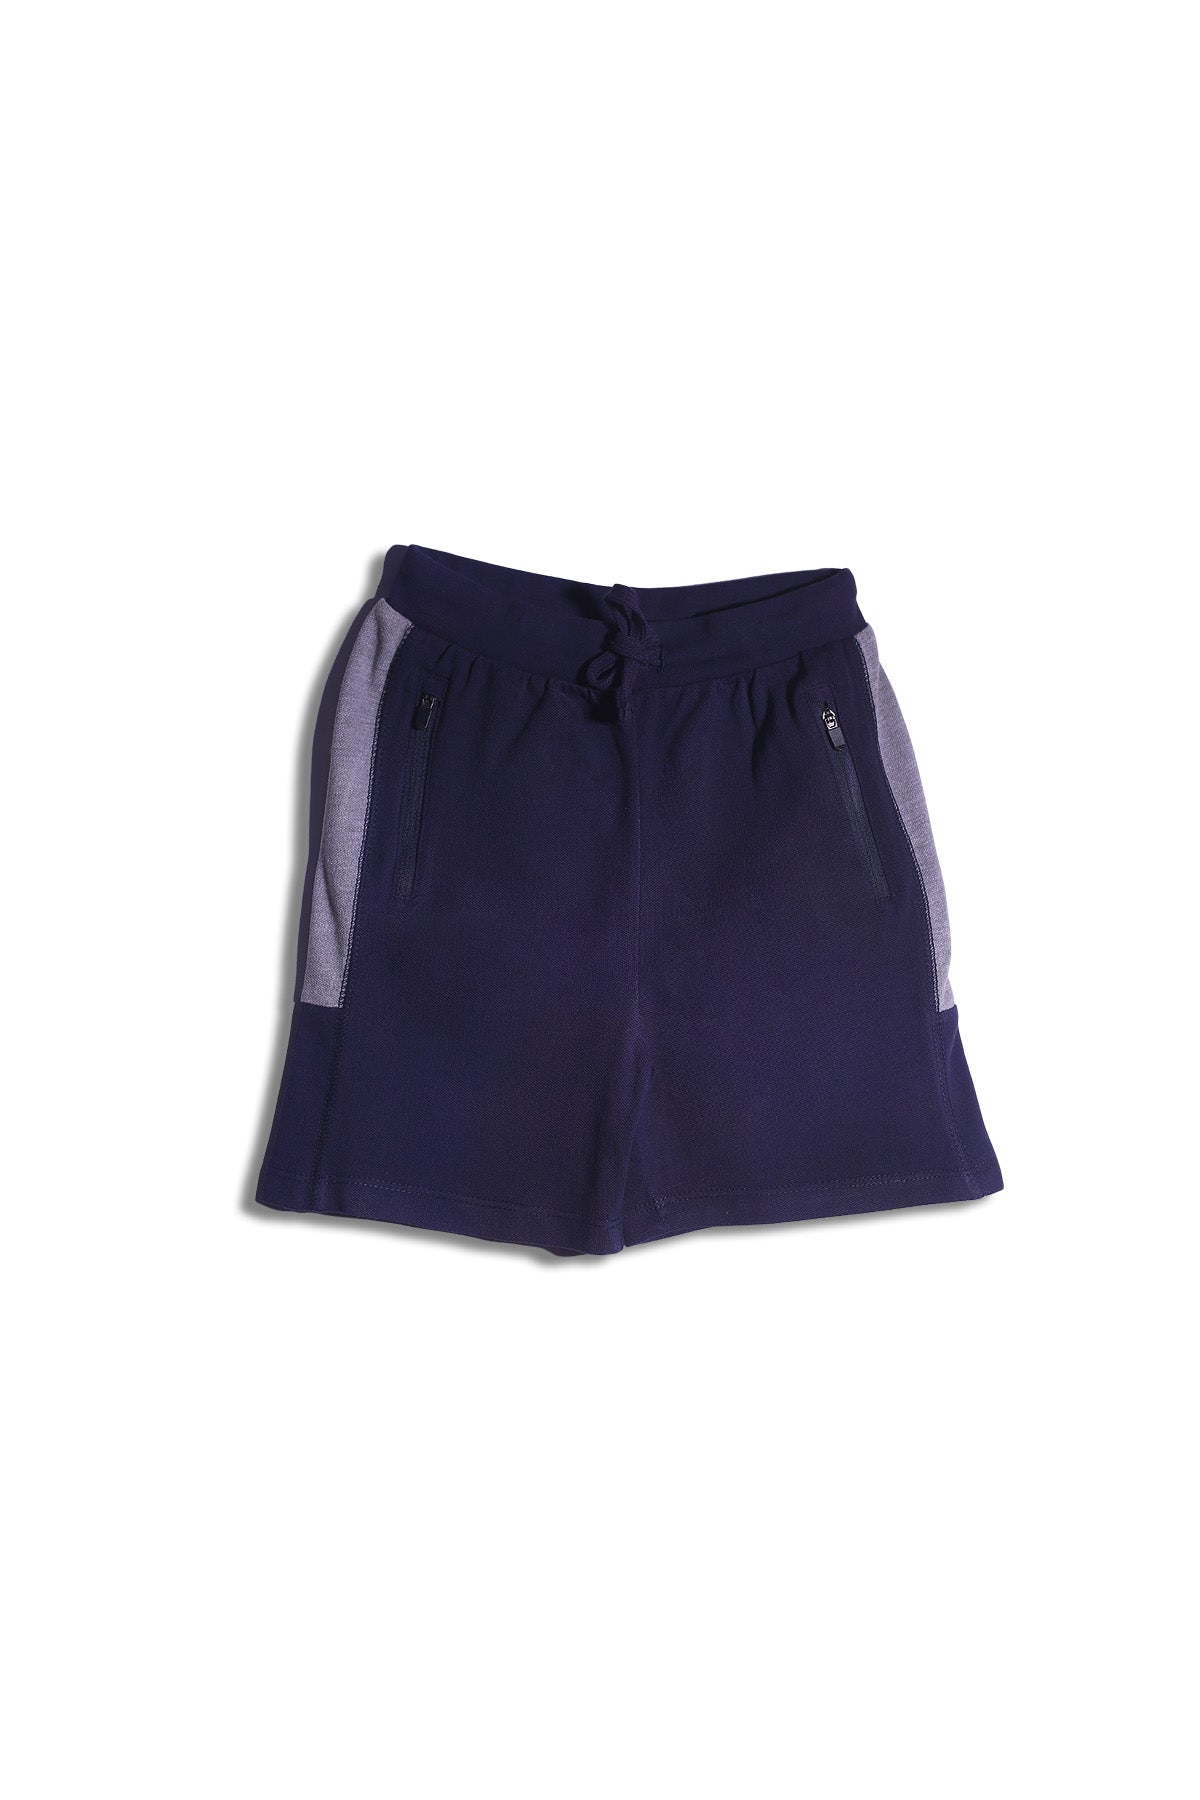 Shorts With Panel (KS-162)